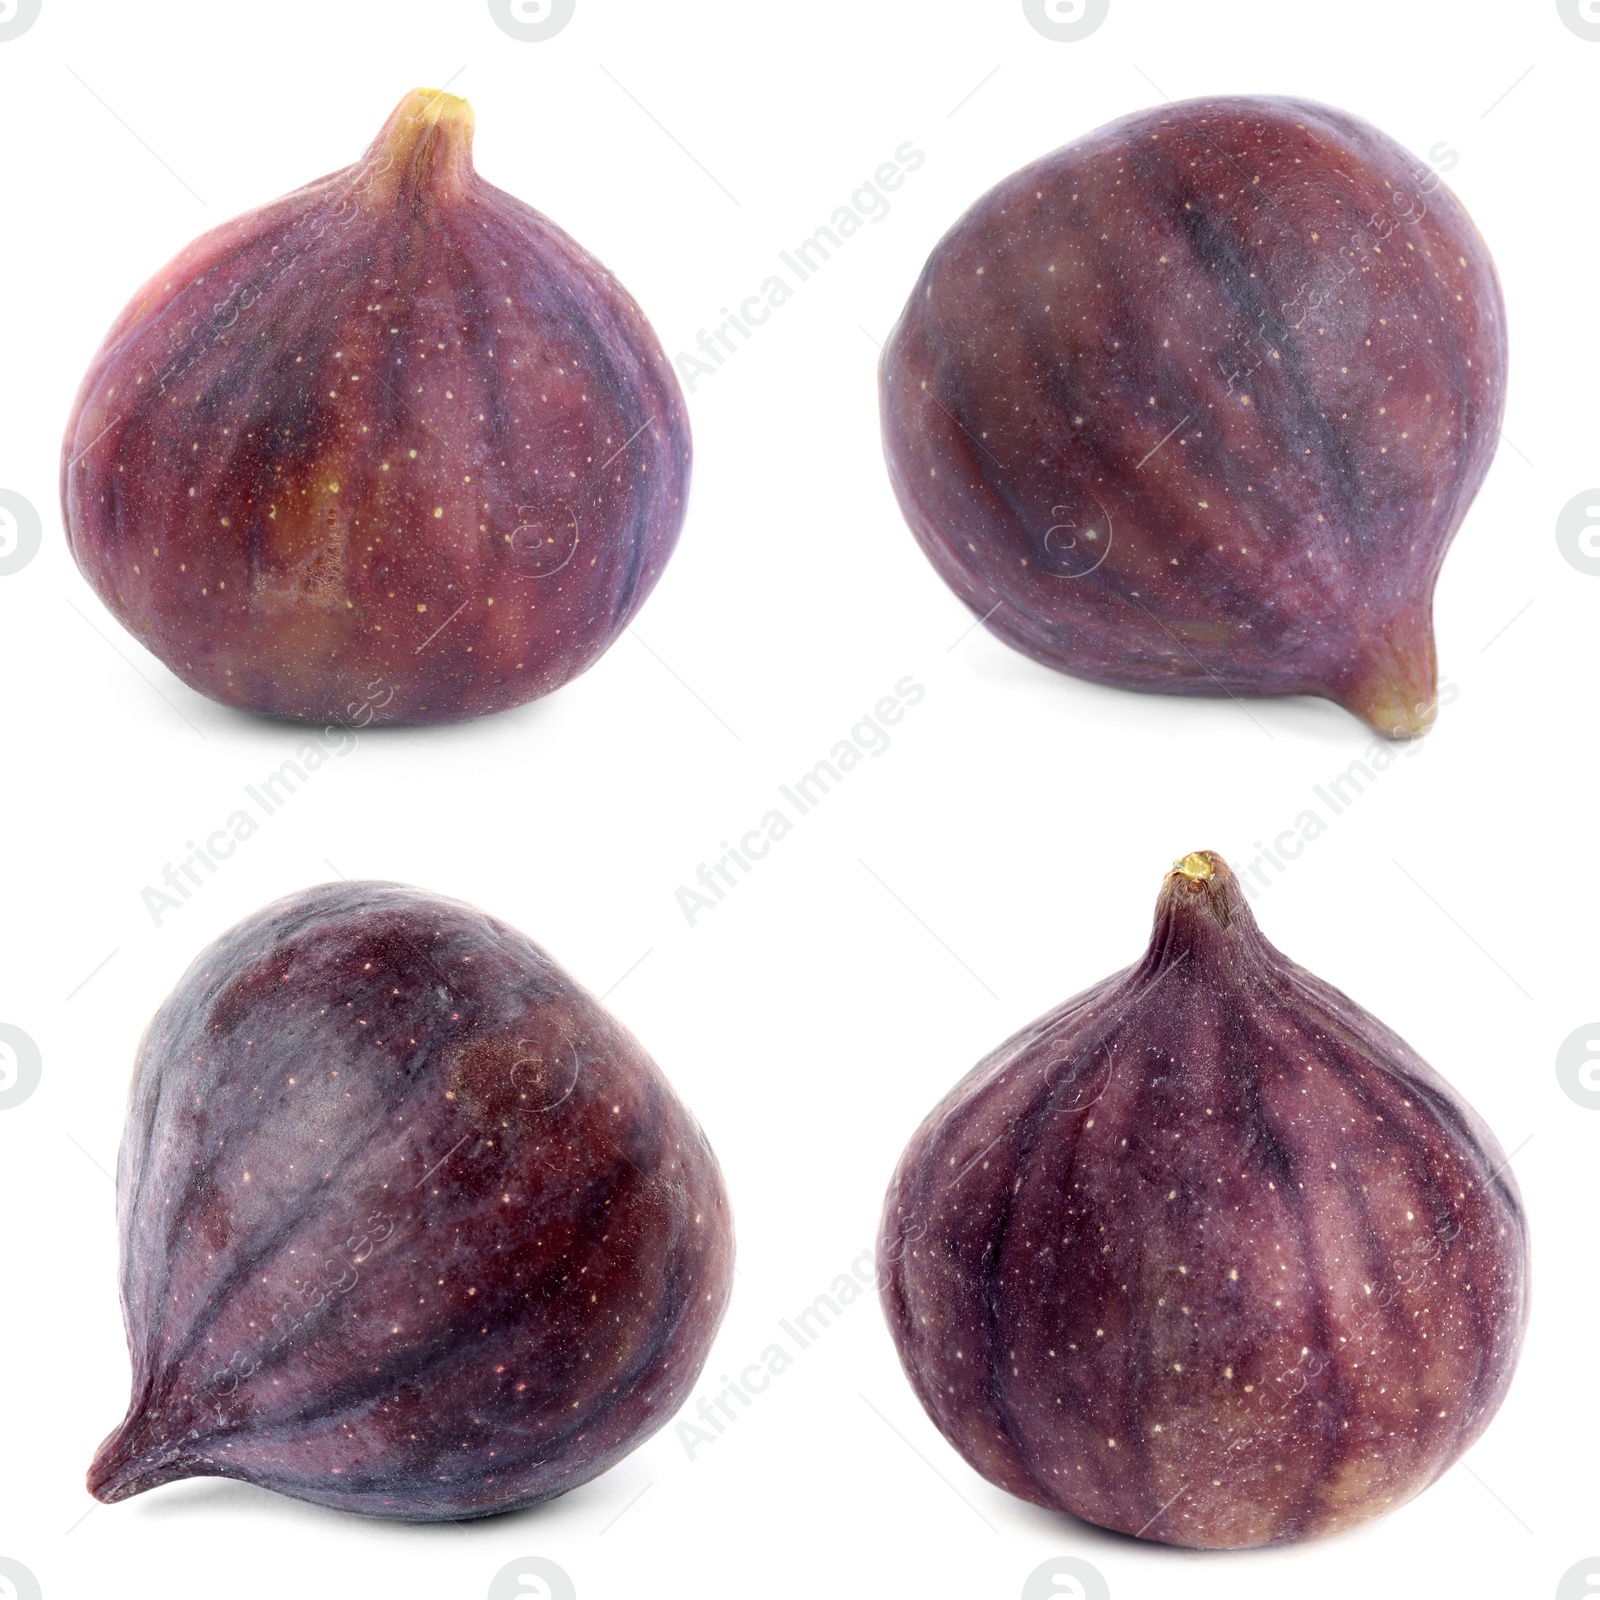 Image of Set of whole figs on white background